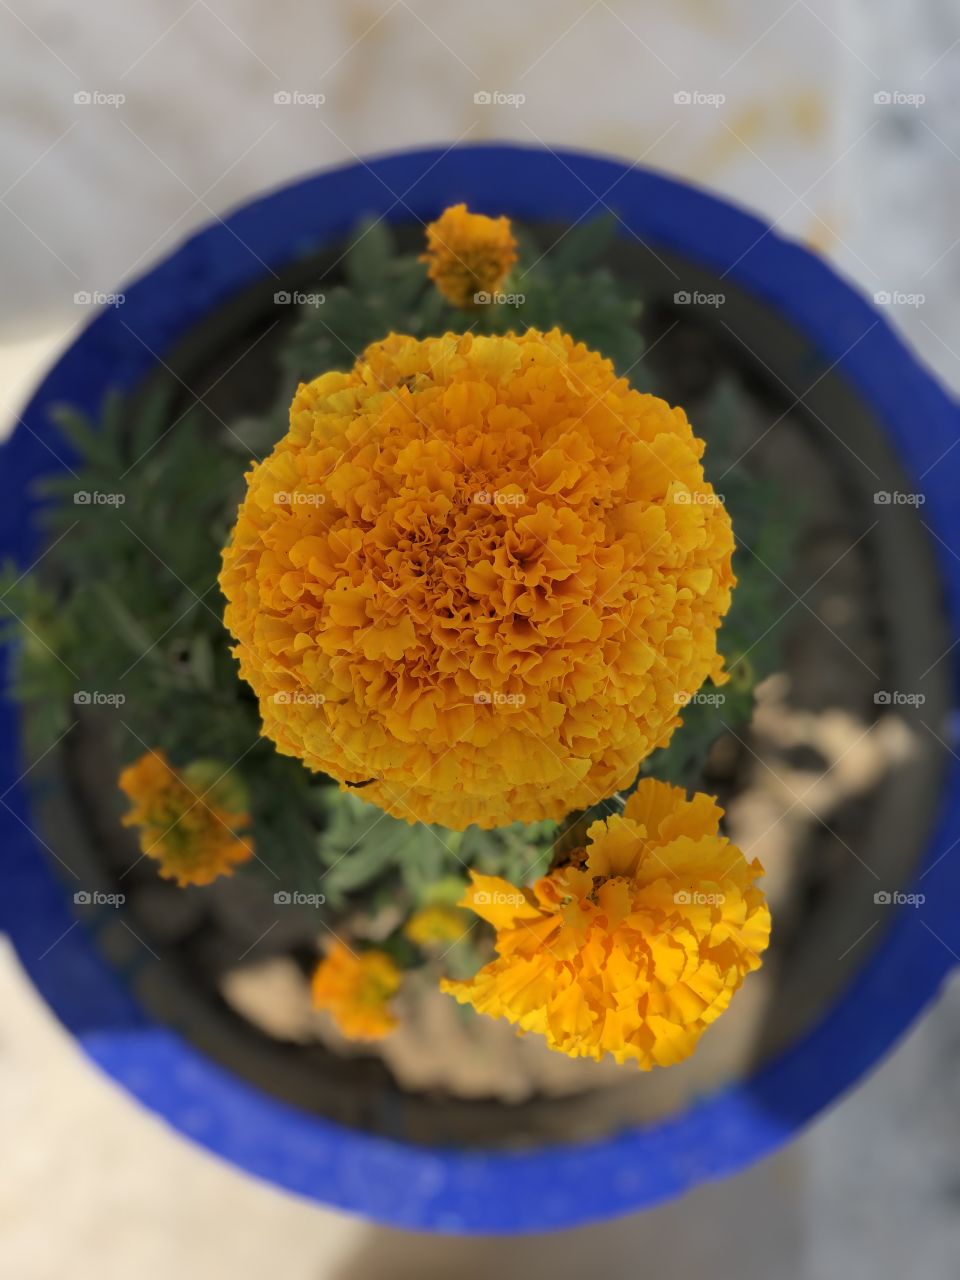 Yellow marigold flower in a blue pot...top view closeup!